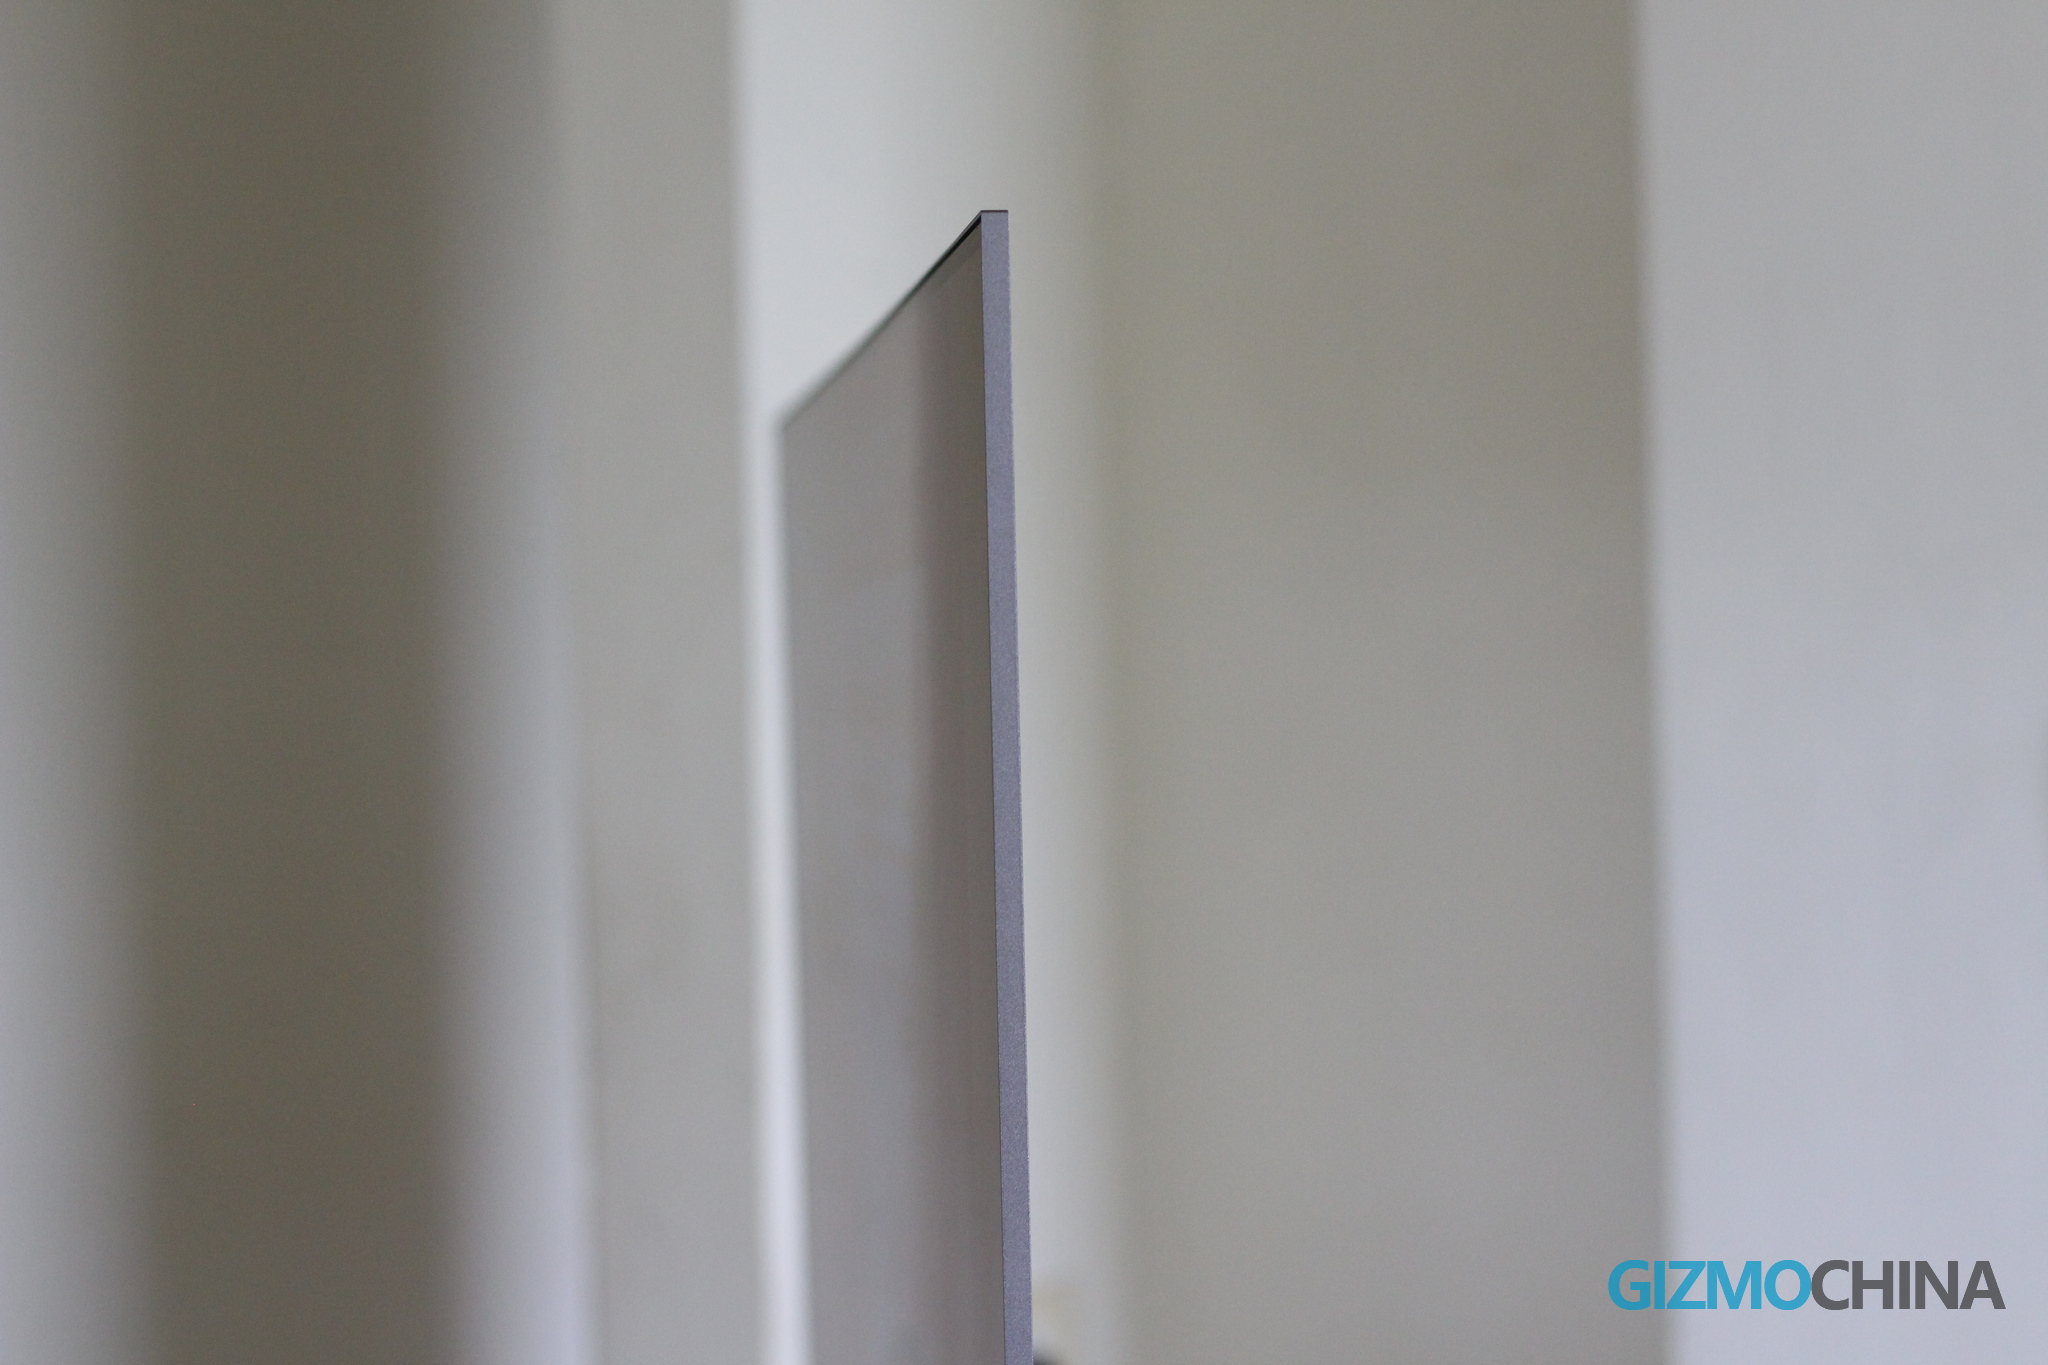   OnePlus TV U1 Super Slim Design 